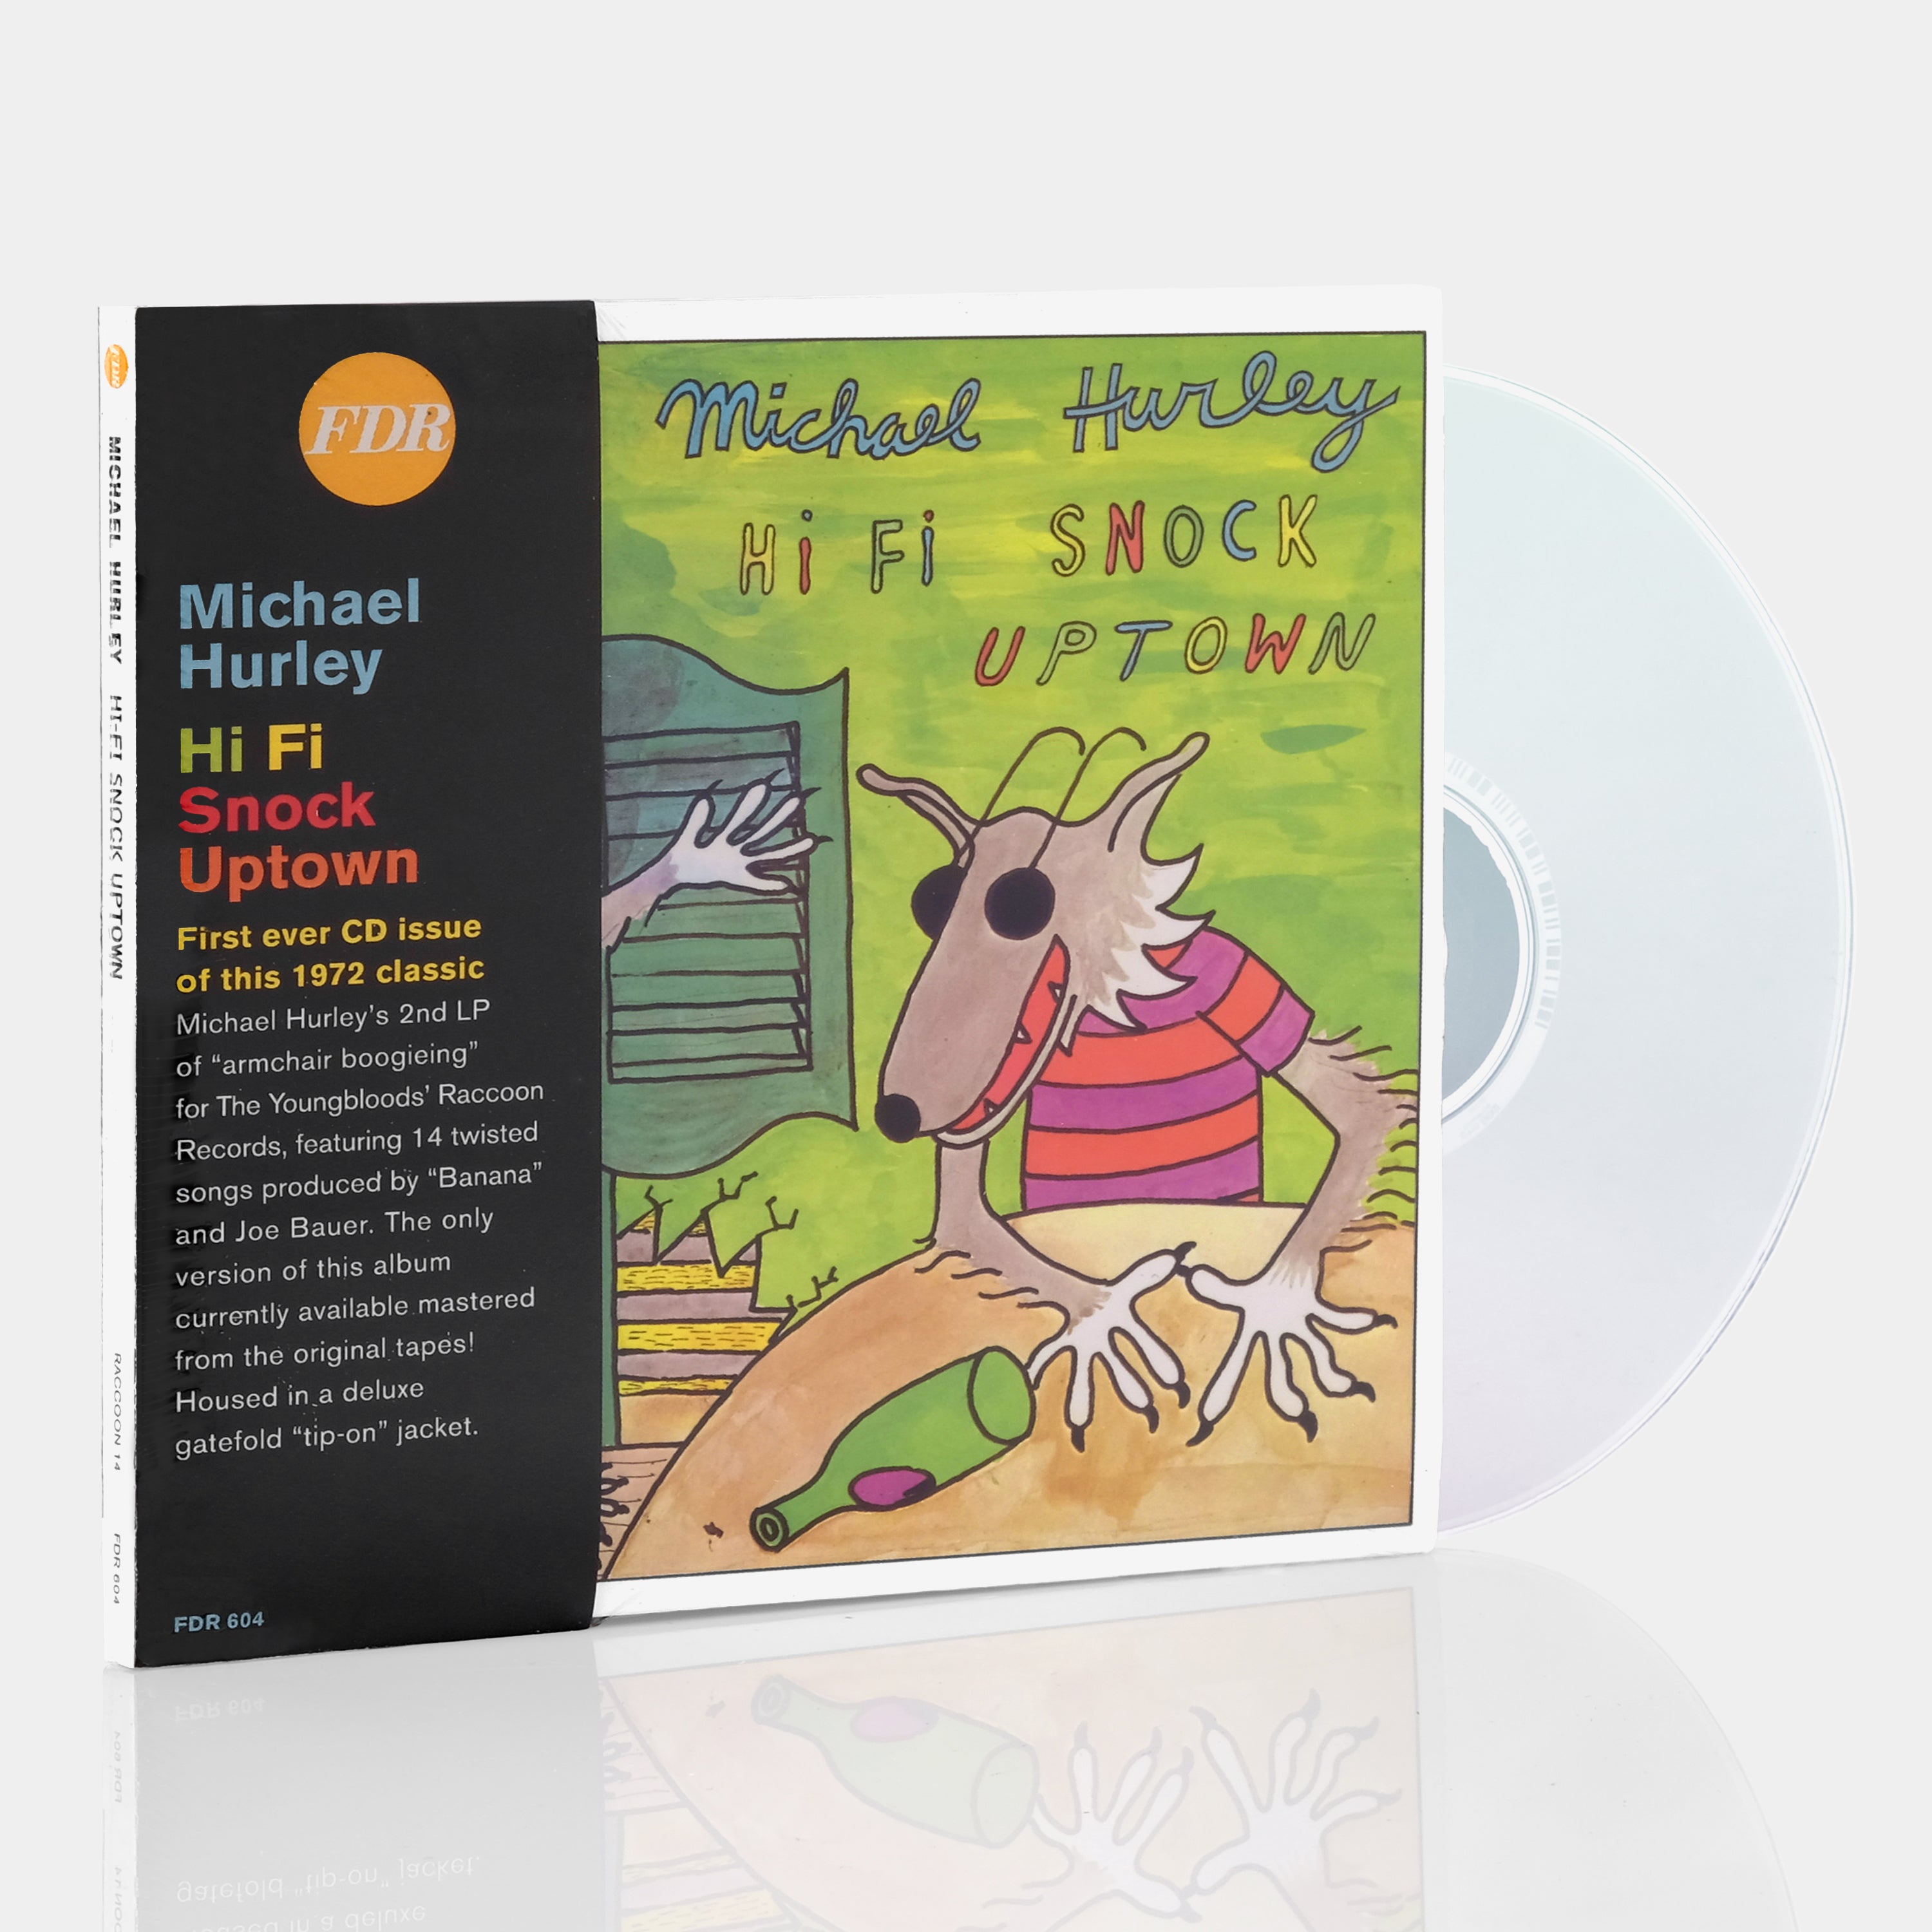 Michael Hurley - Hi Fi Snock Uptown CD